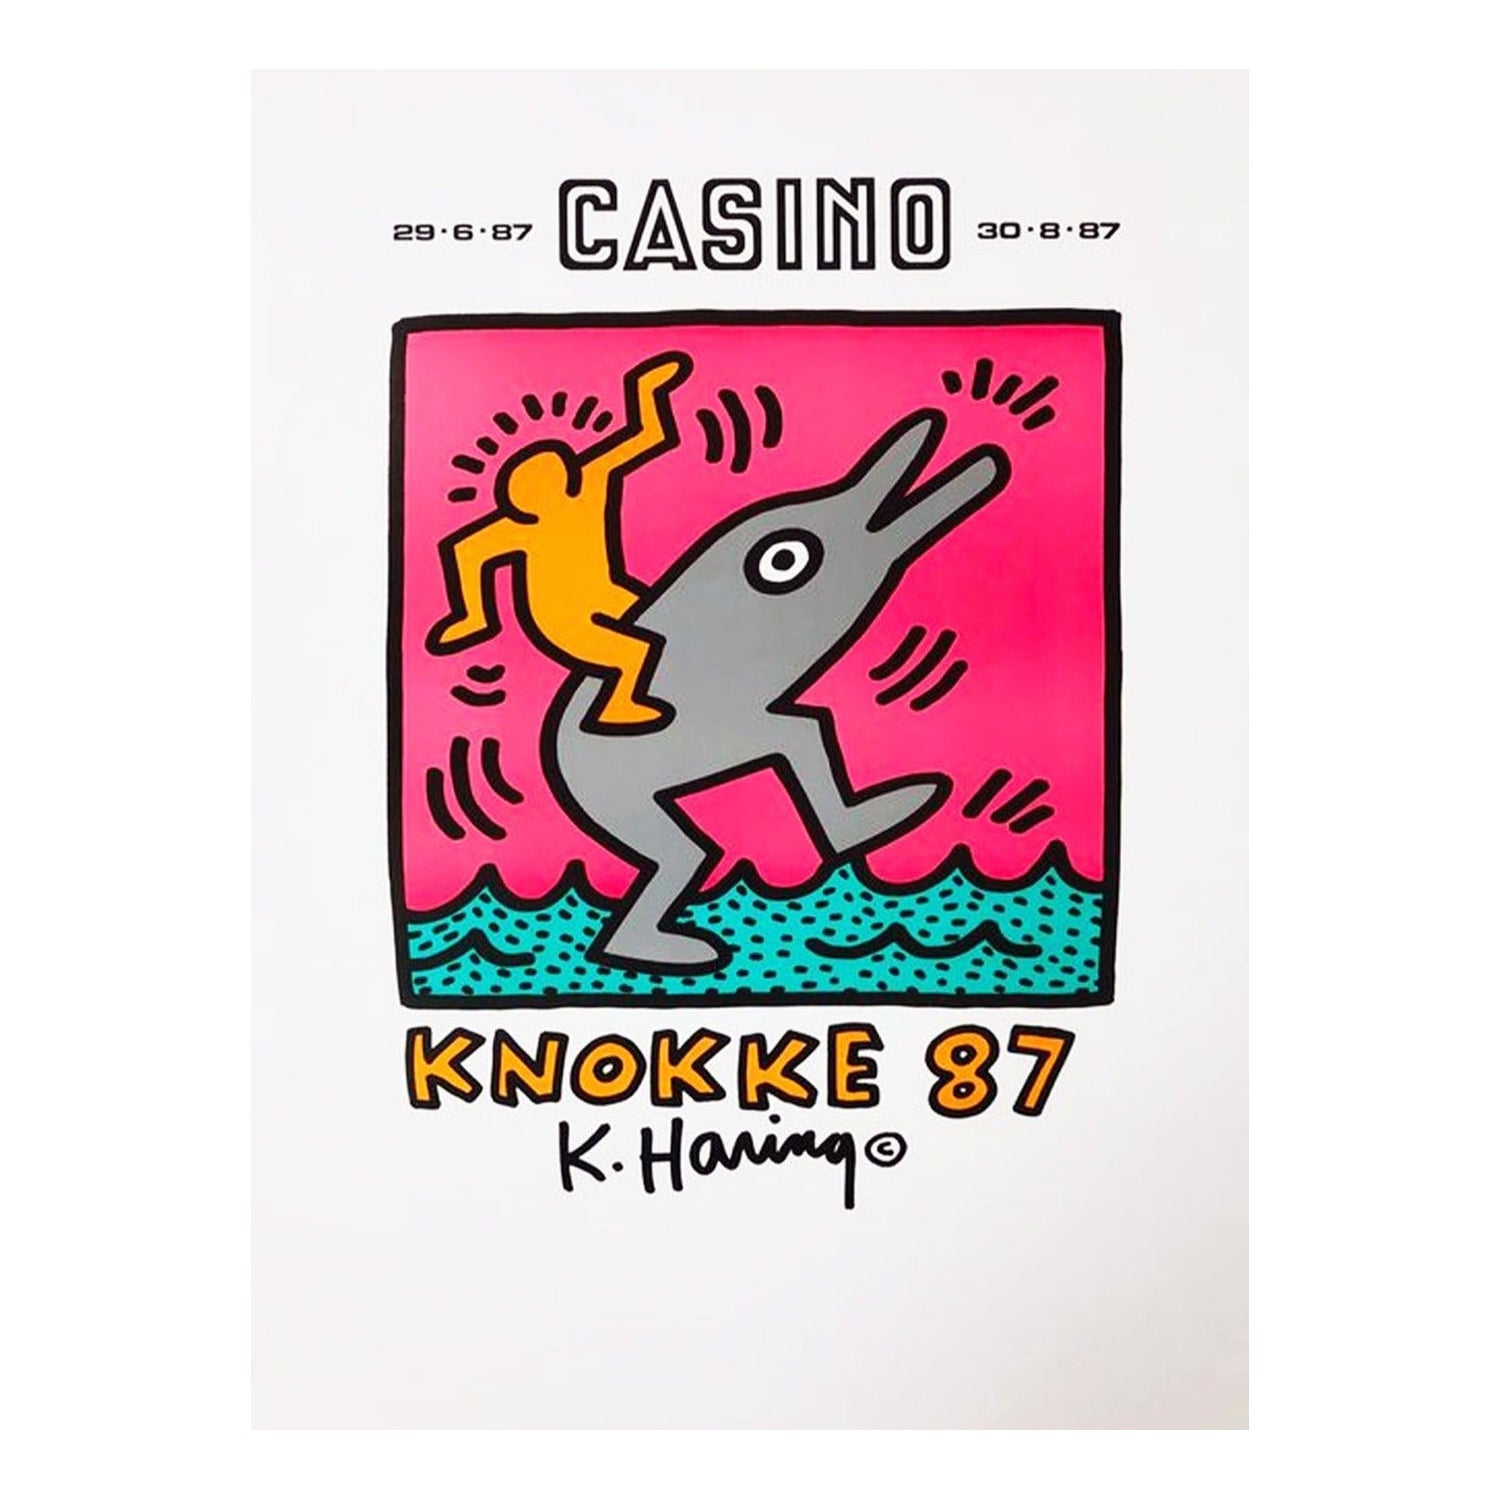 1987 Keith Haring, Casino Knokke, Original-Vintage-Poster